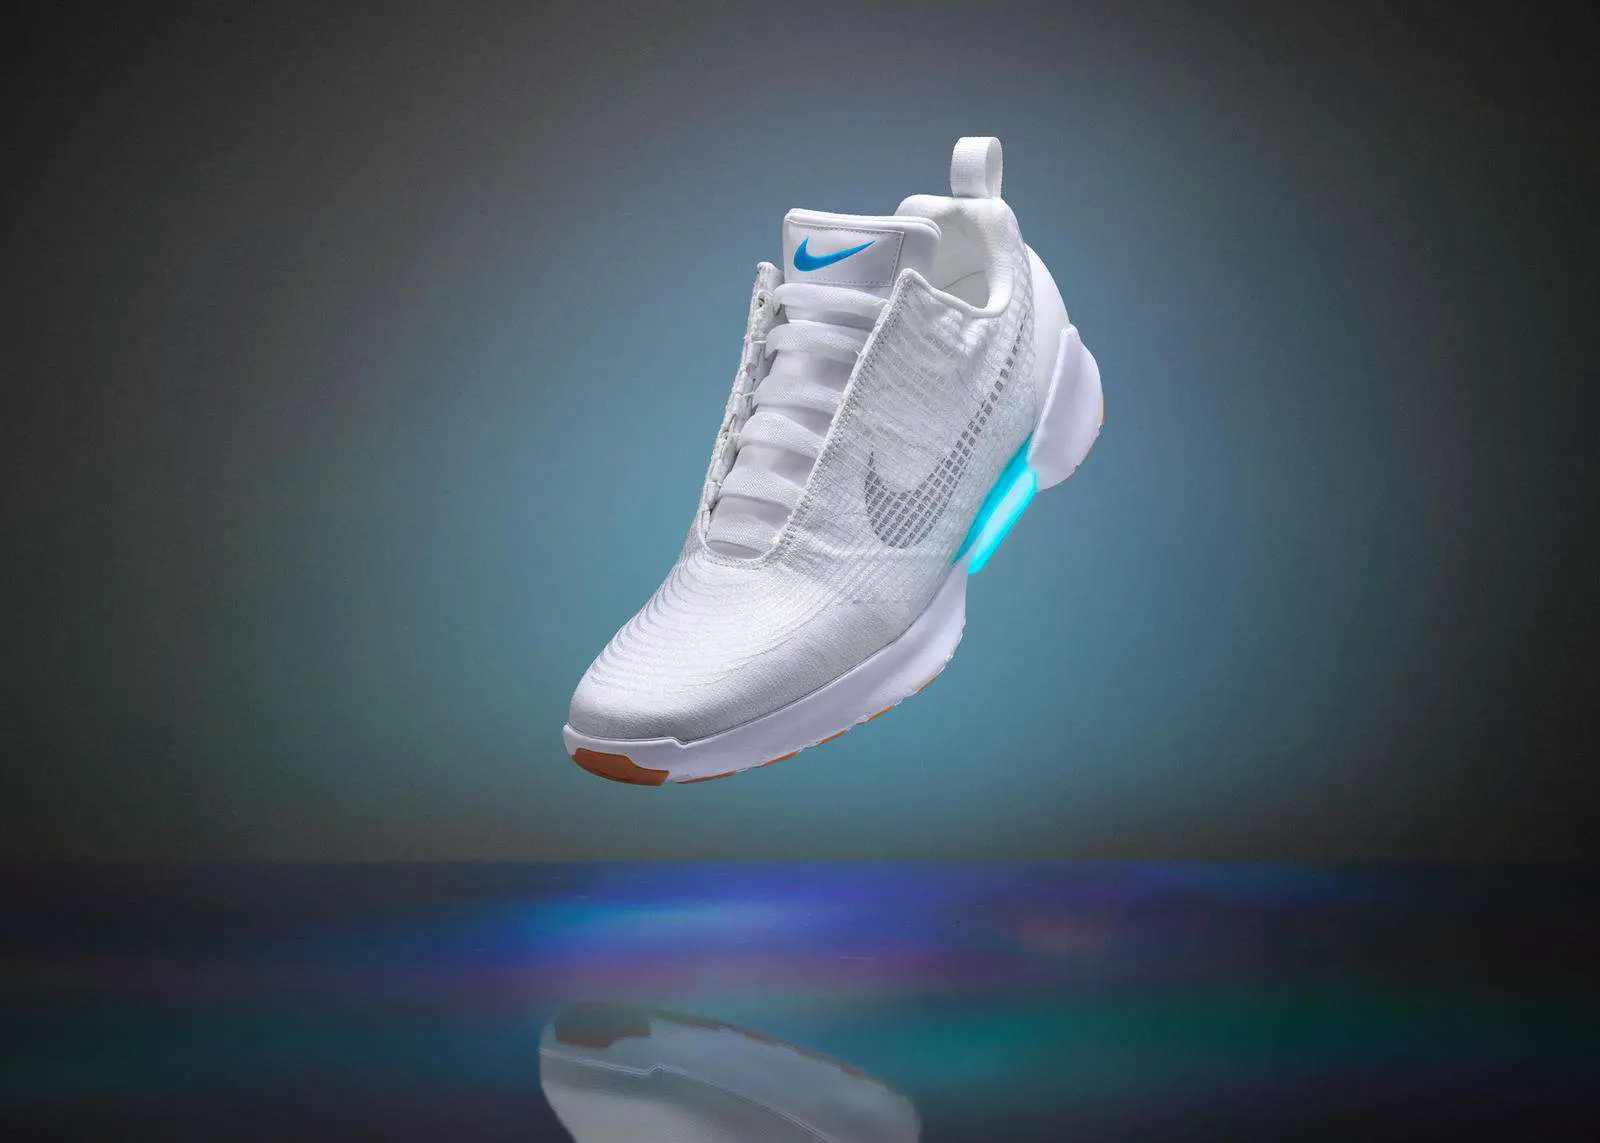 Nike HyperAdapt 1.0 Shoes Feature Mechanized, Auto